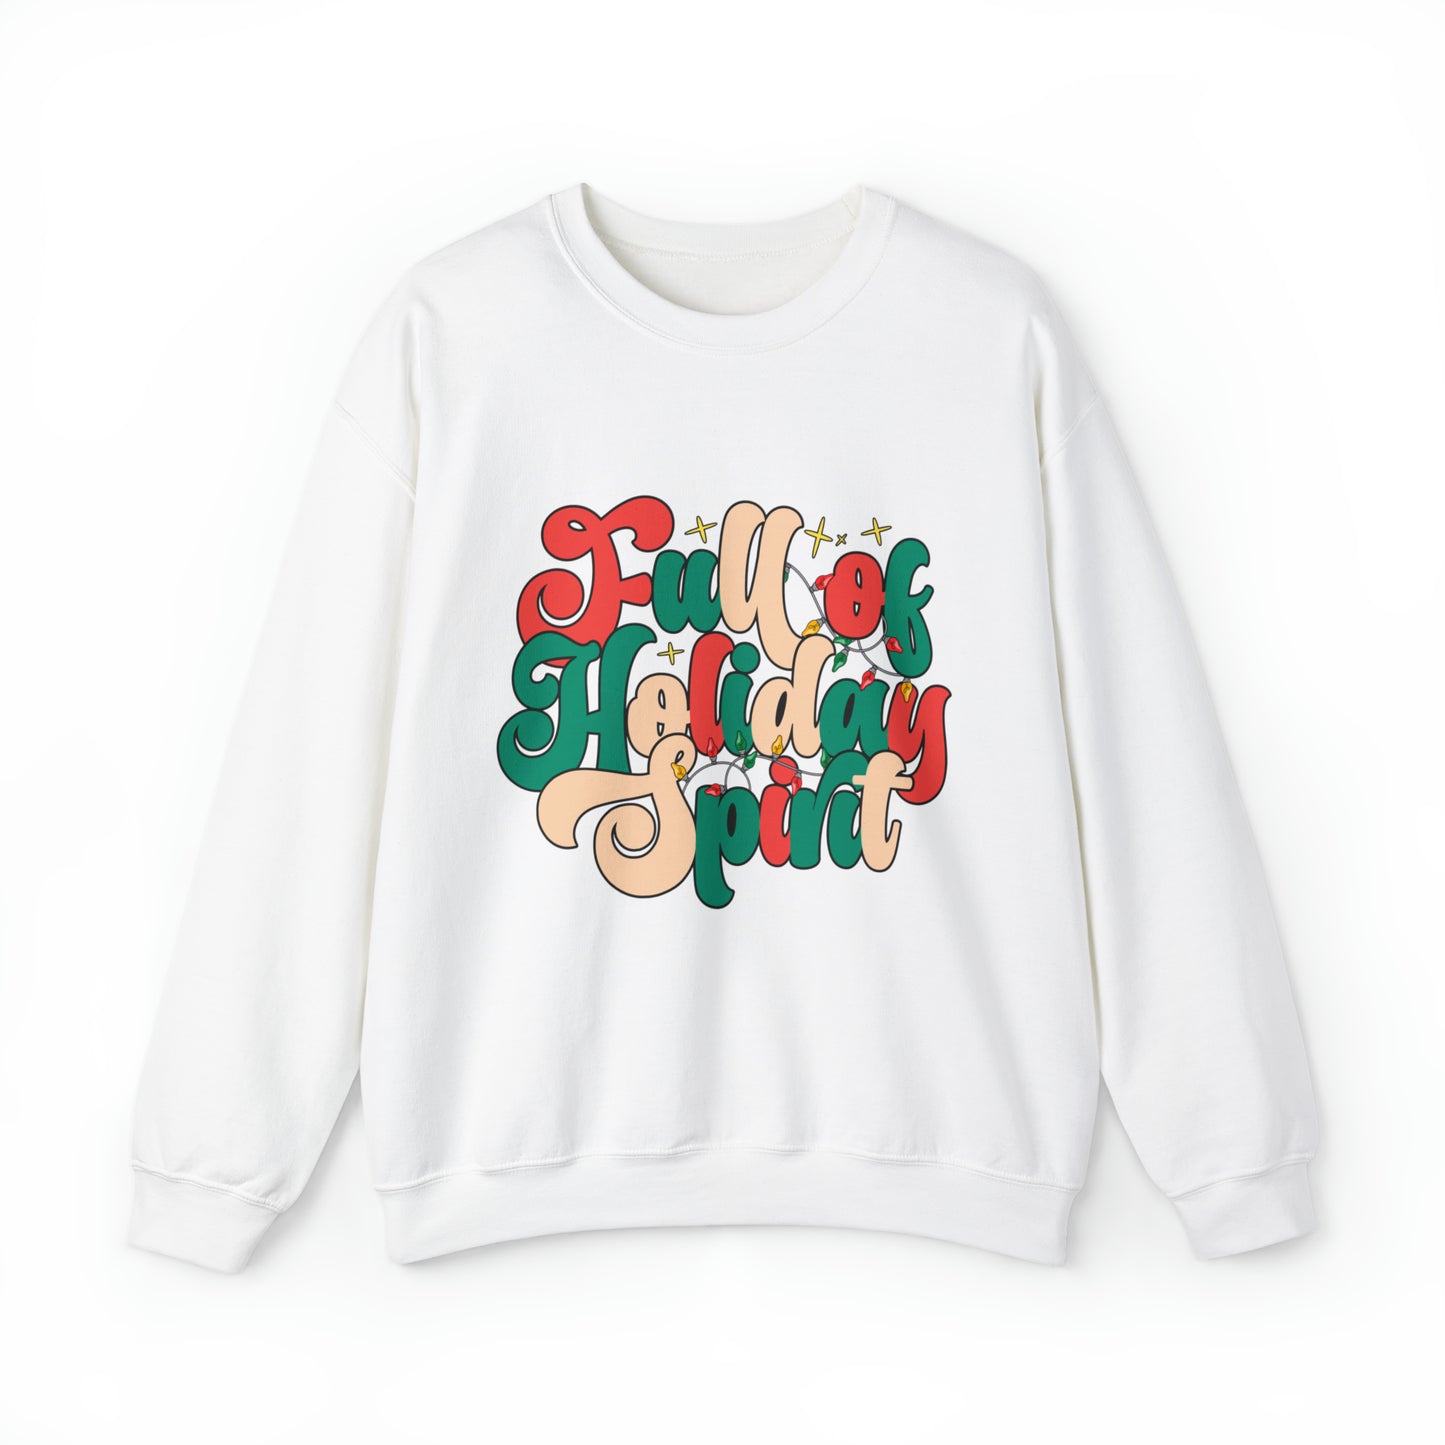 Full of Holiday Spirit Women's Christmas Crewneck Sweatshirt